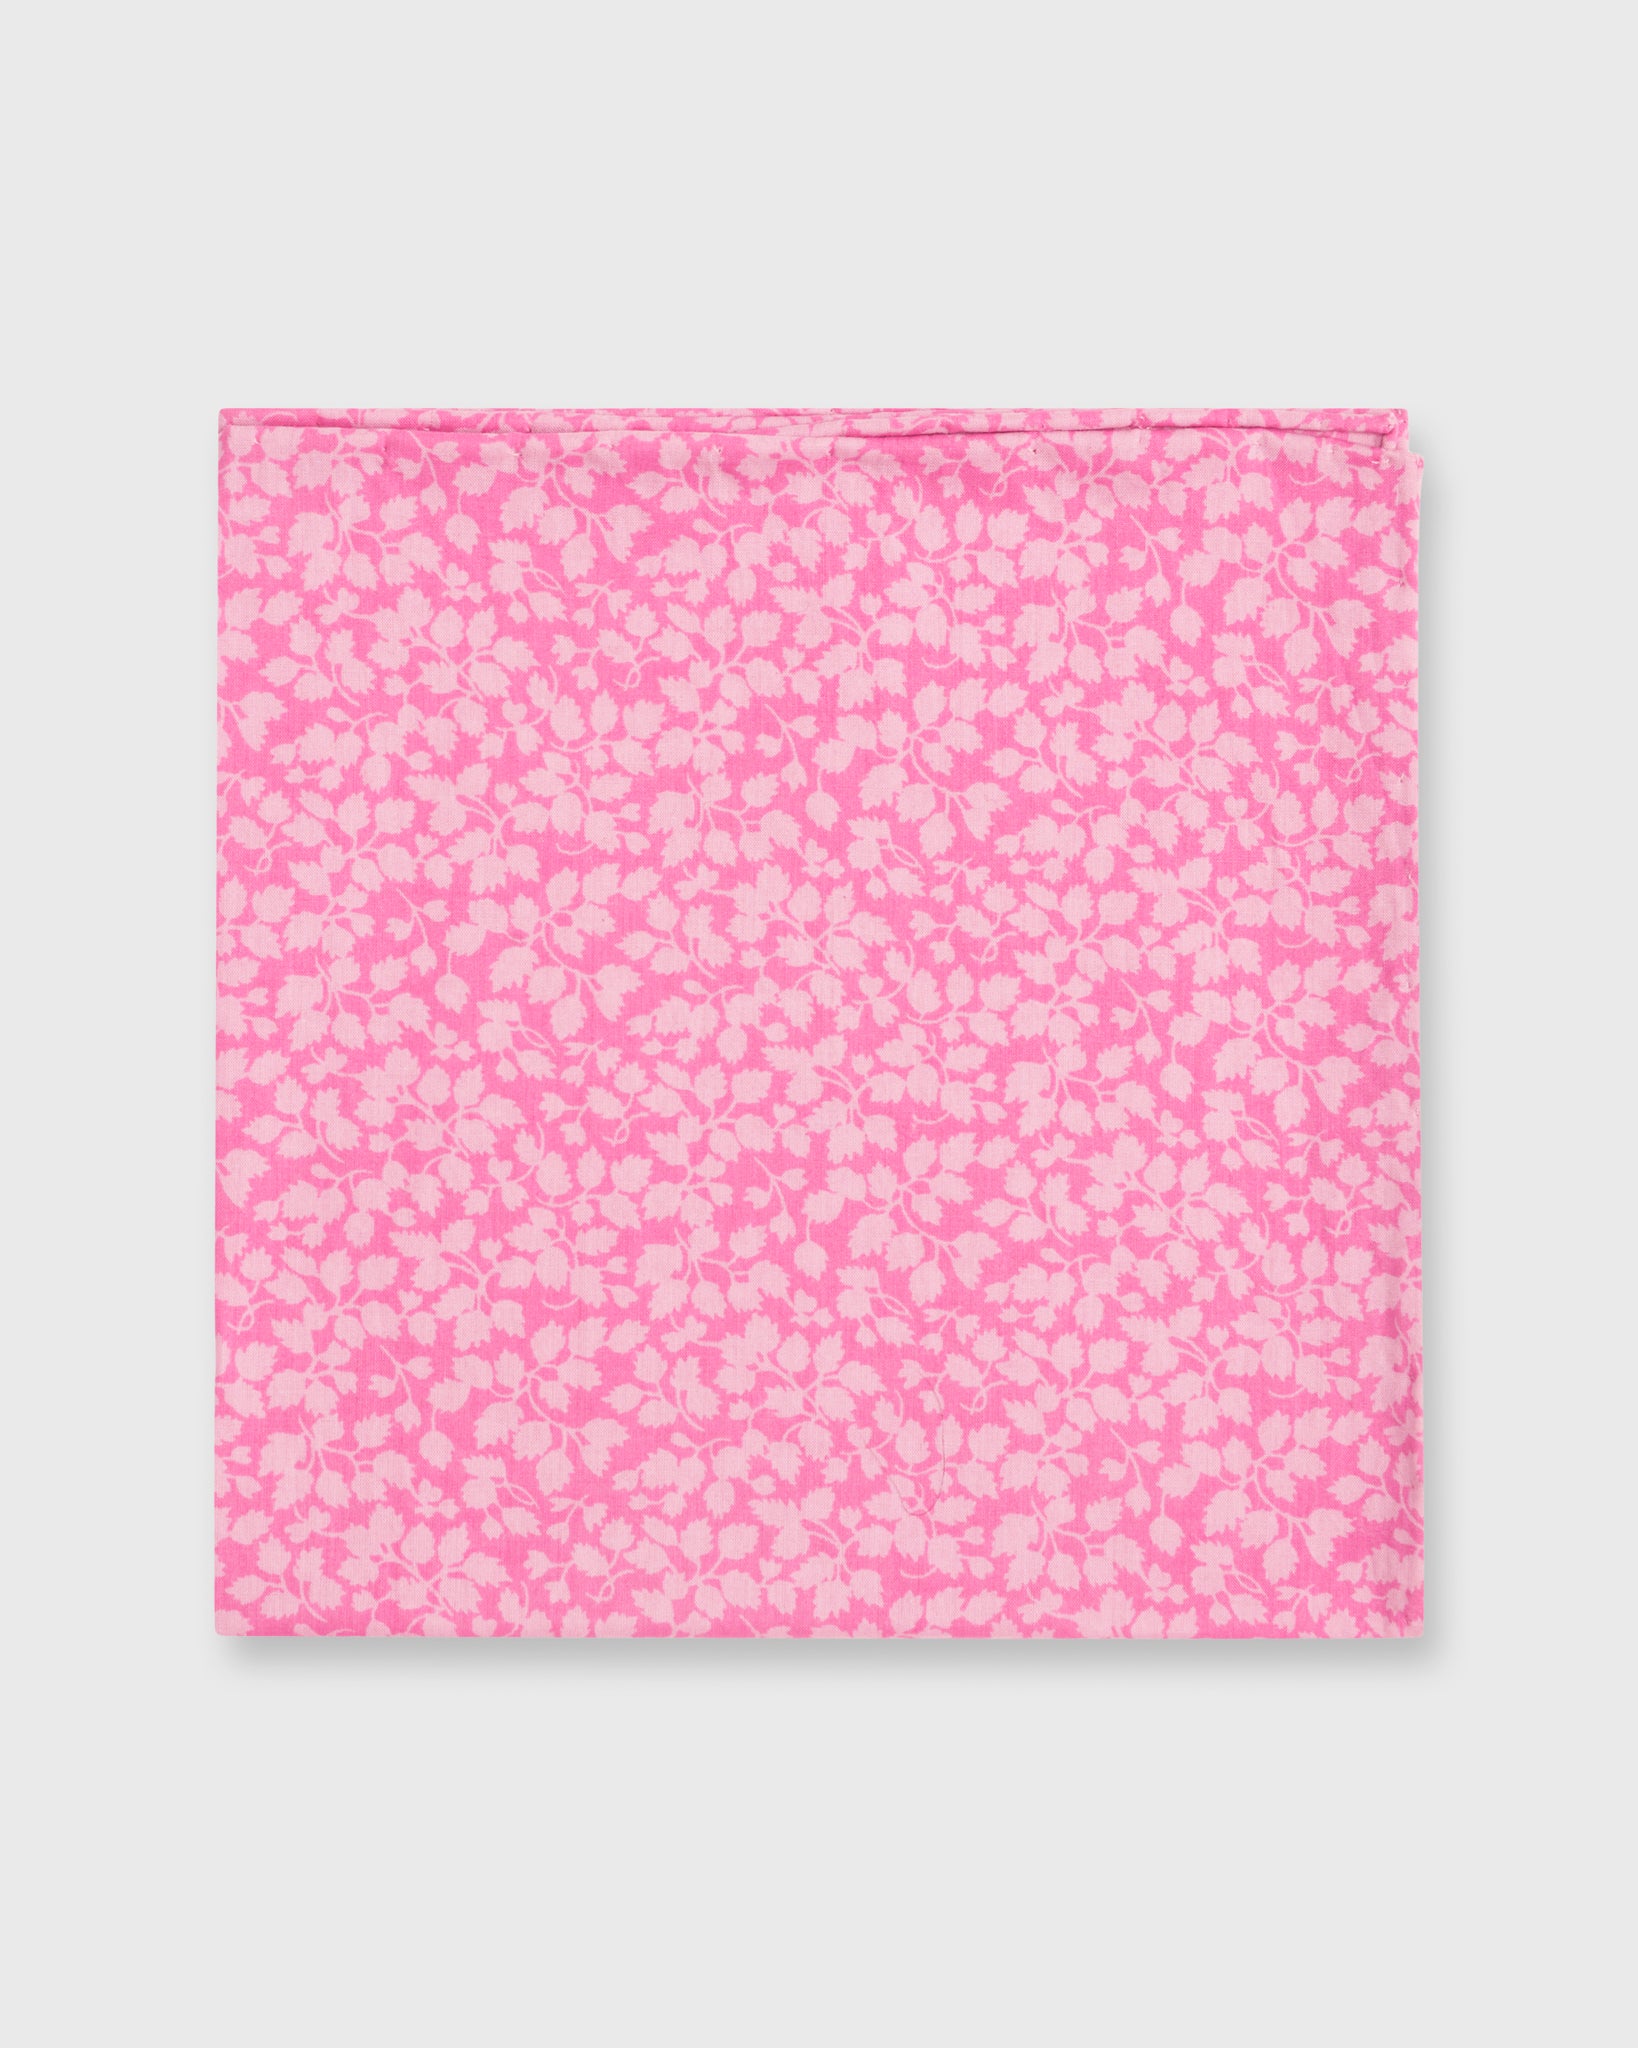 Cotton Print Pocket Square in Pink Glennjade Liberty Fabric